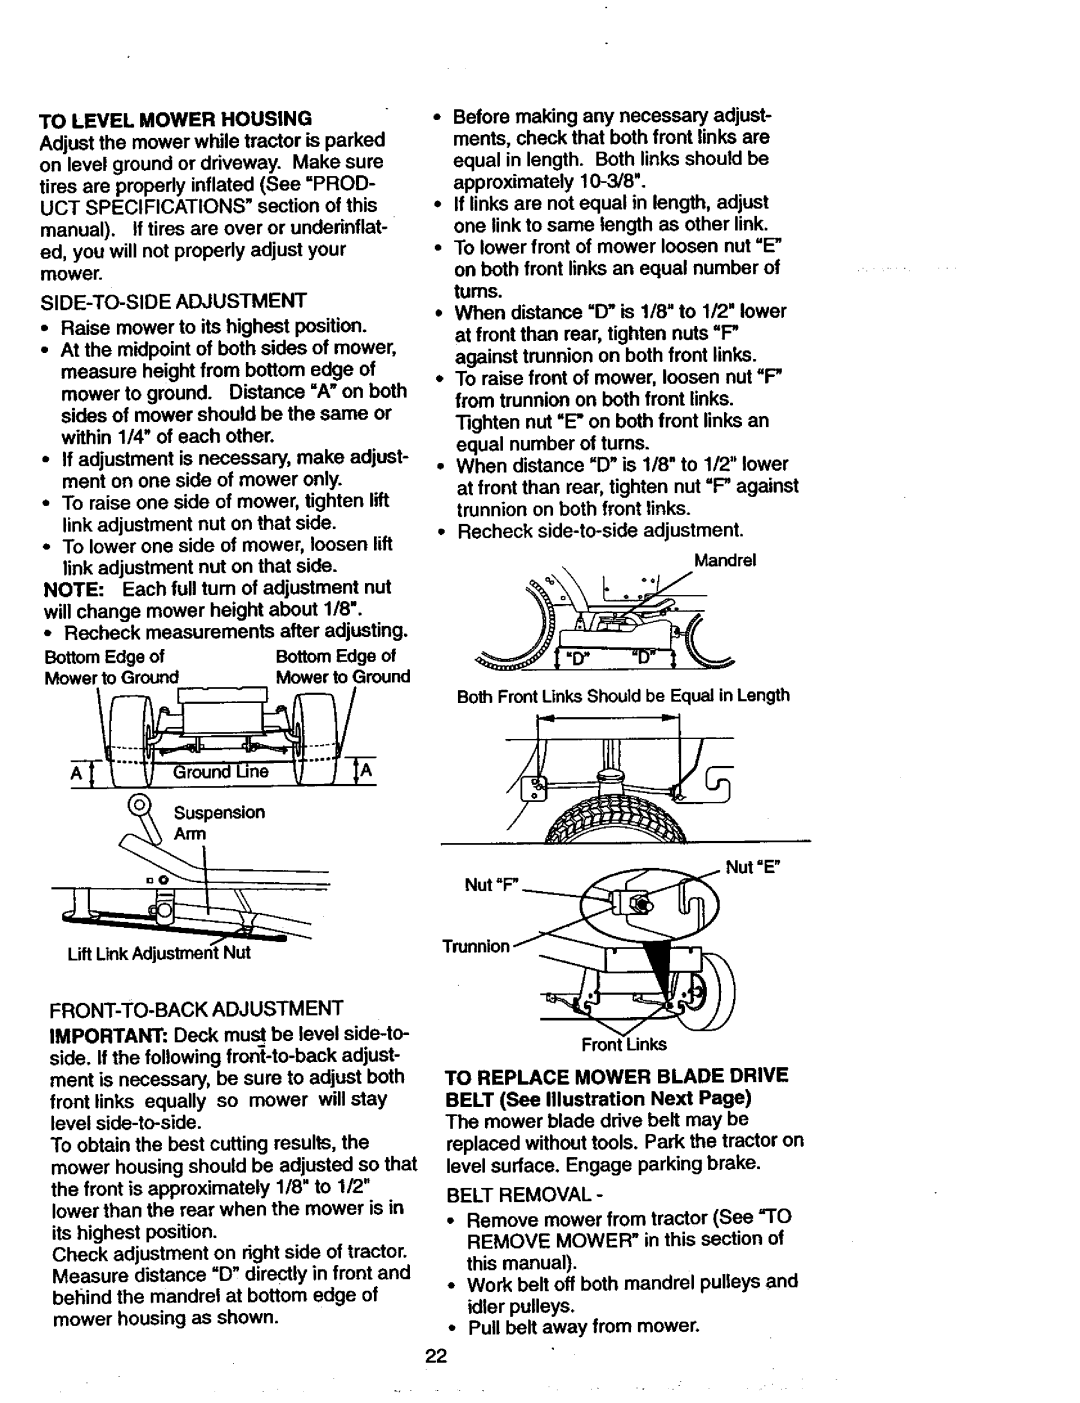 Craftsman 917.27077 manual Tolevelmowerhousing, Front-To-Backadjustment 